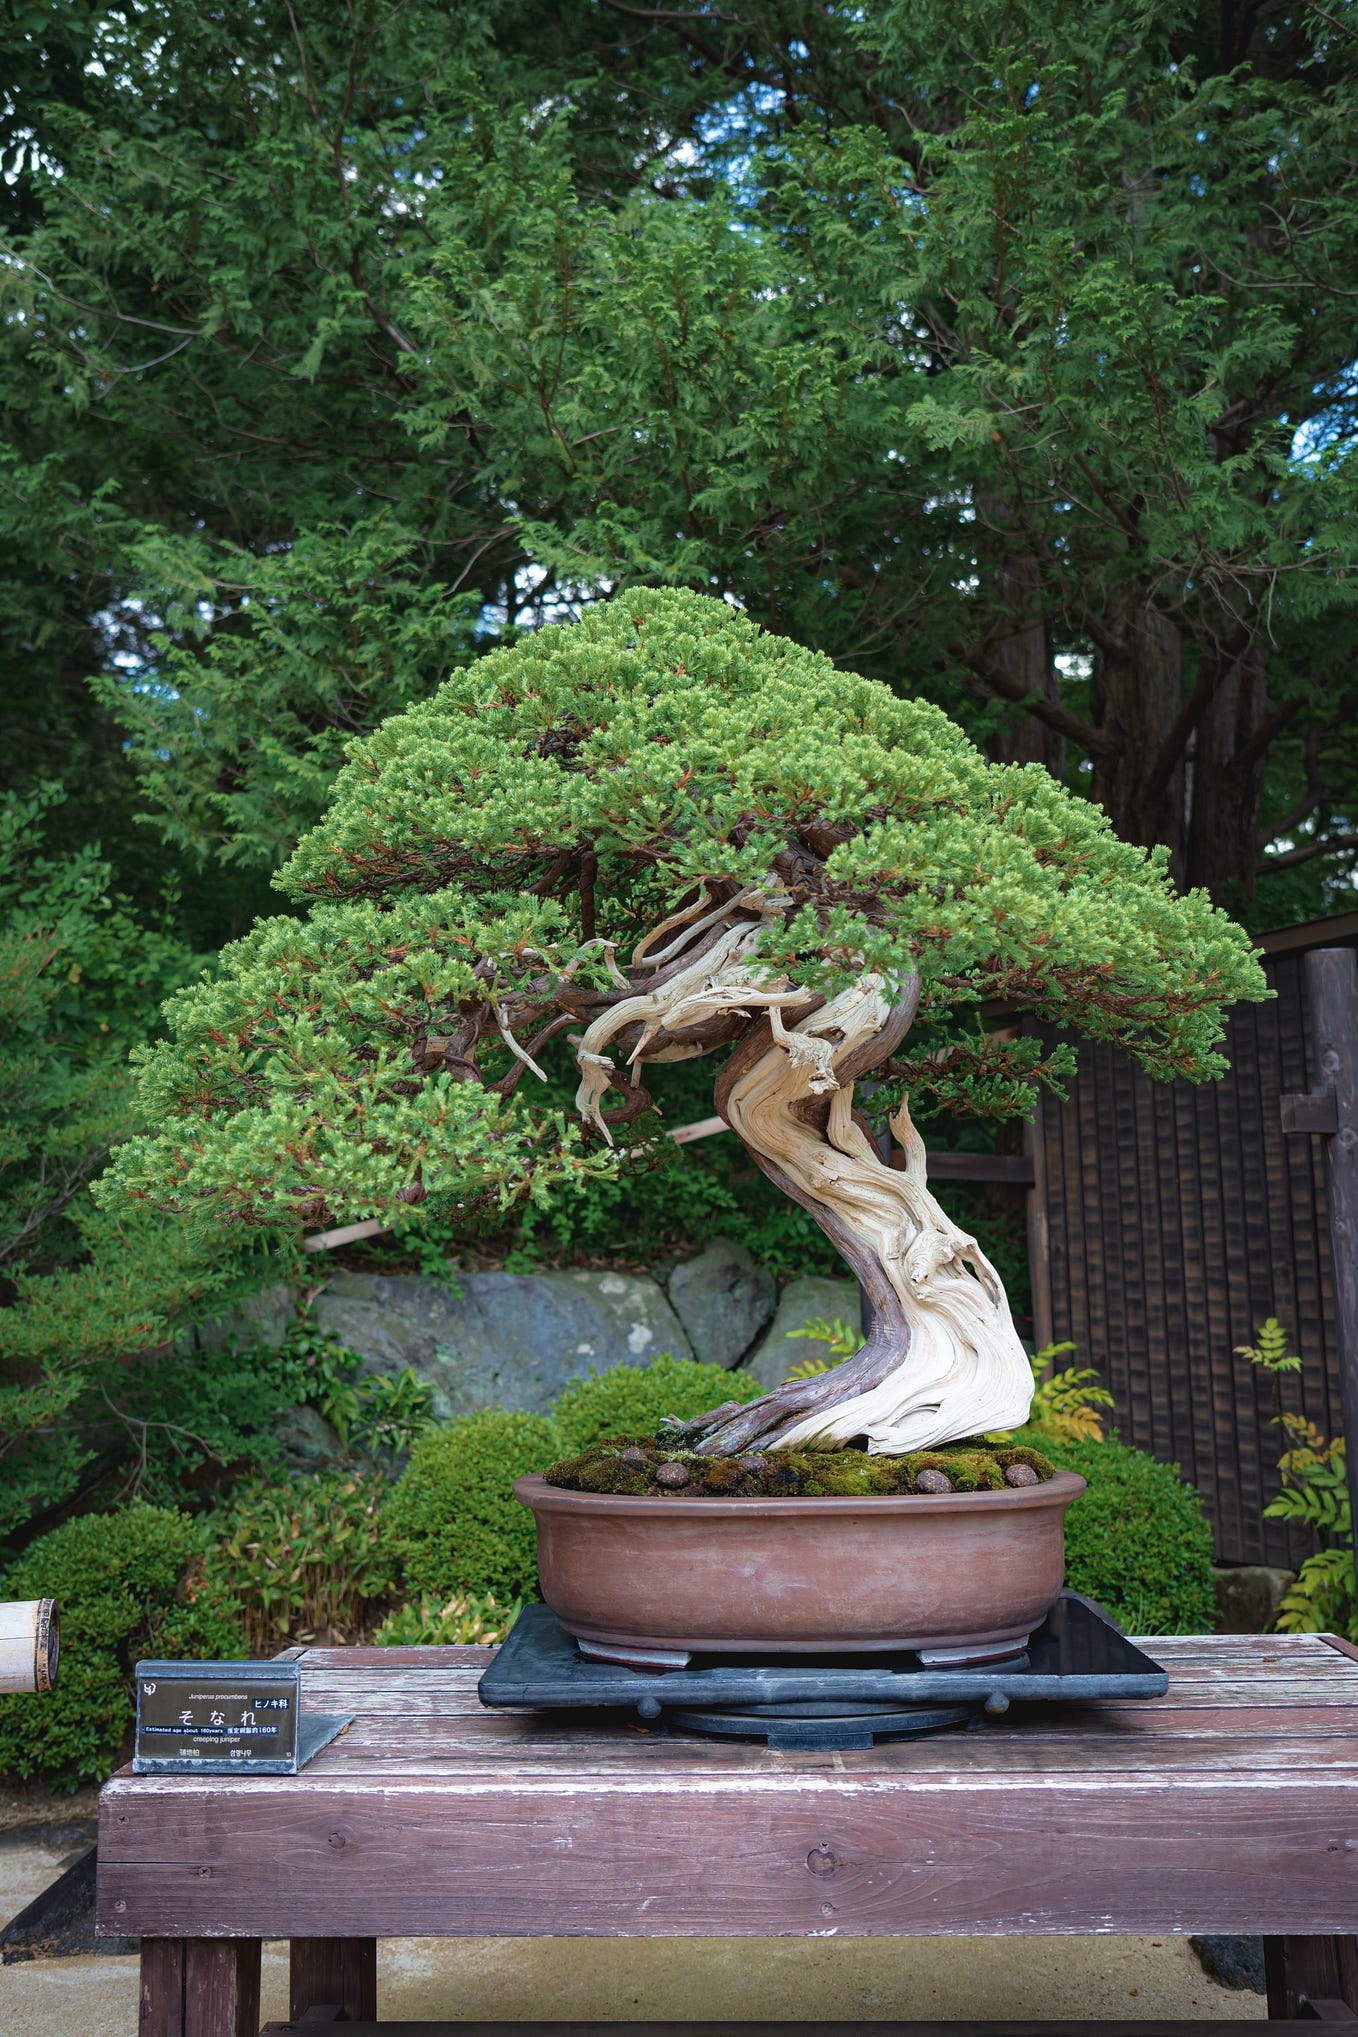 A comprehensive guide to bonsai trees, by Bonsai Tree Help